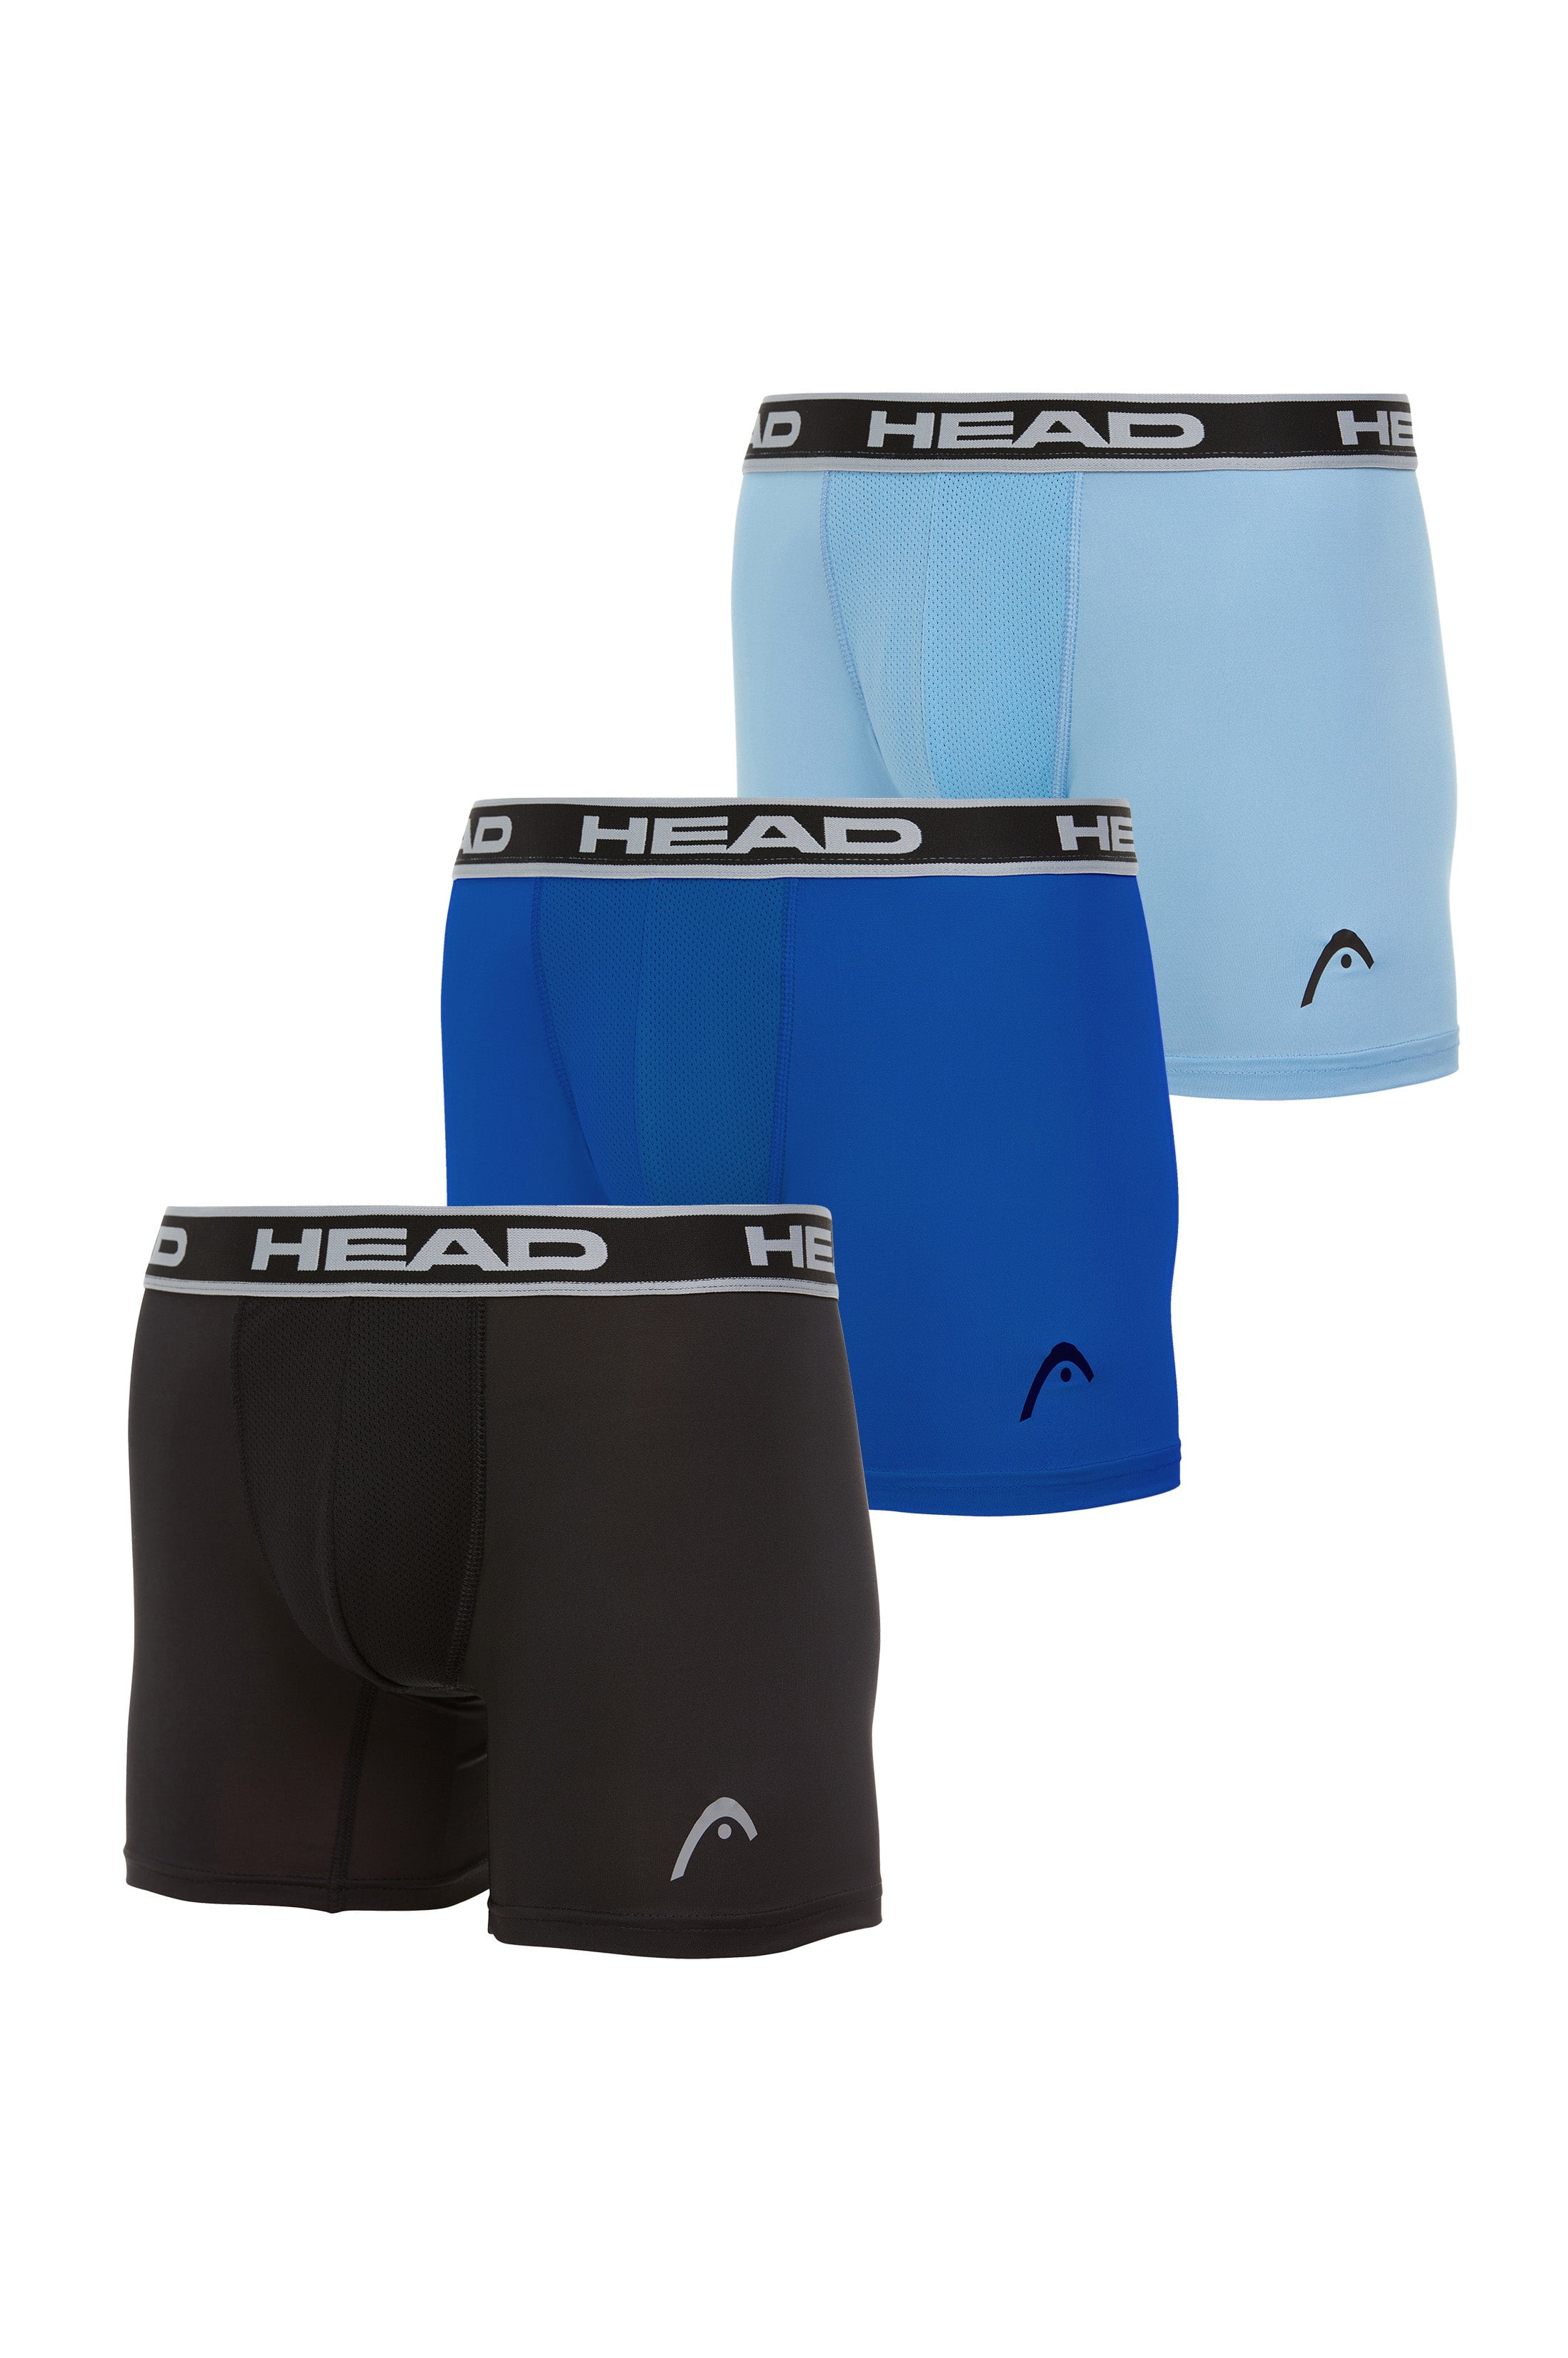 (3-Pack) NEW HEAD Mens Performance Underwear Boxer Briefs S-XL FAST SHIP